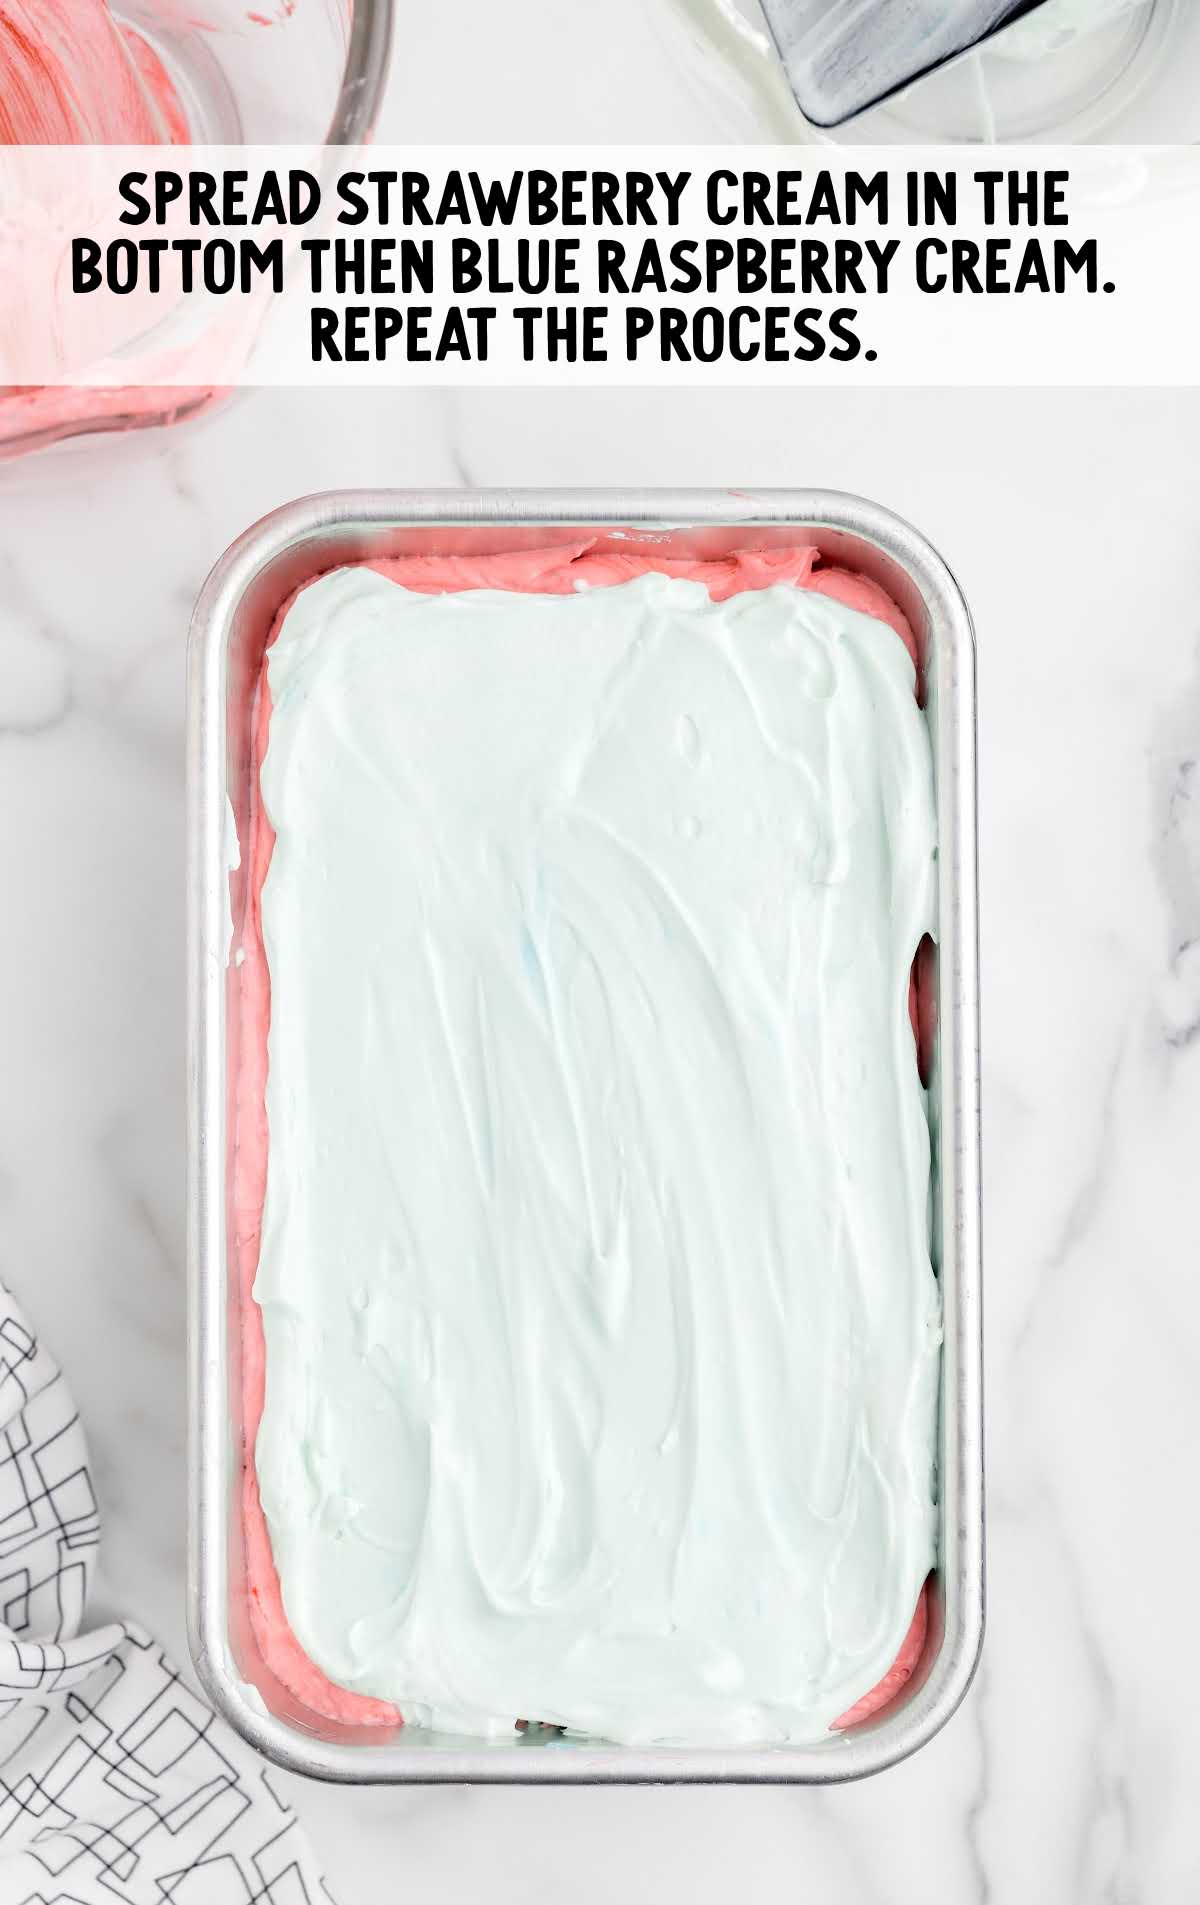 strawberry cream spread on the bottom on a baking dish and the blue raspberry cream spread on top